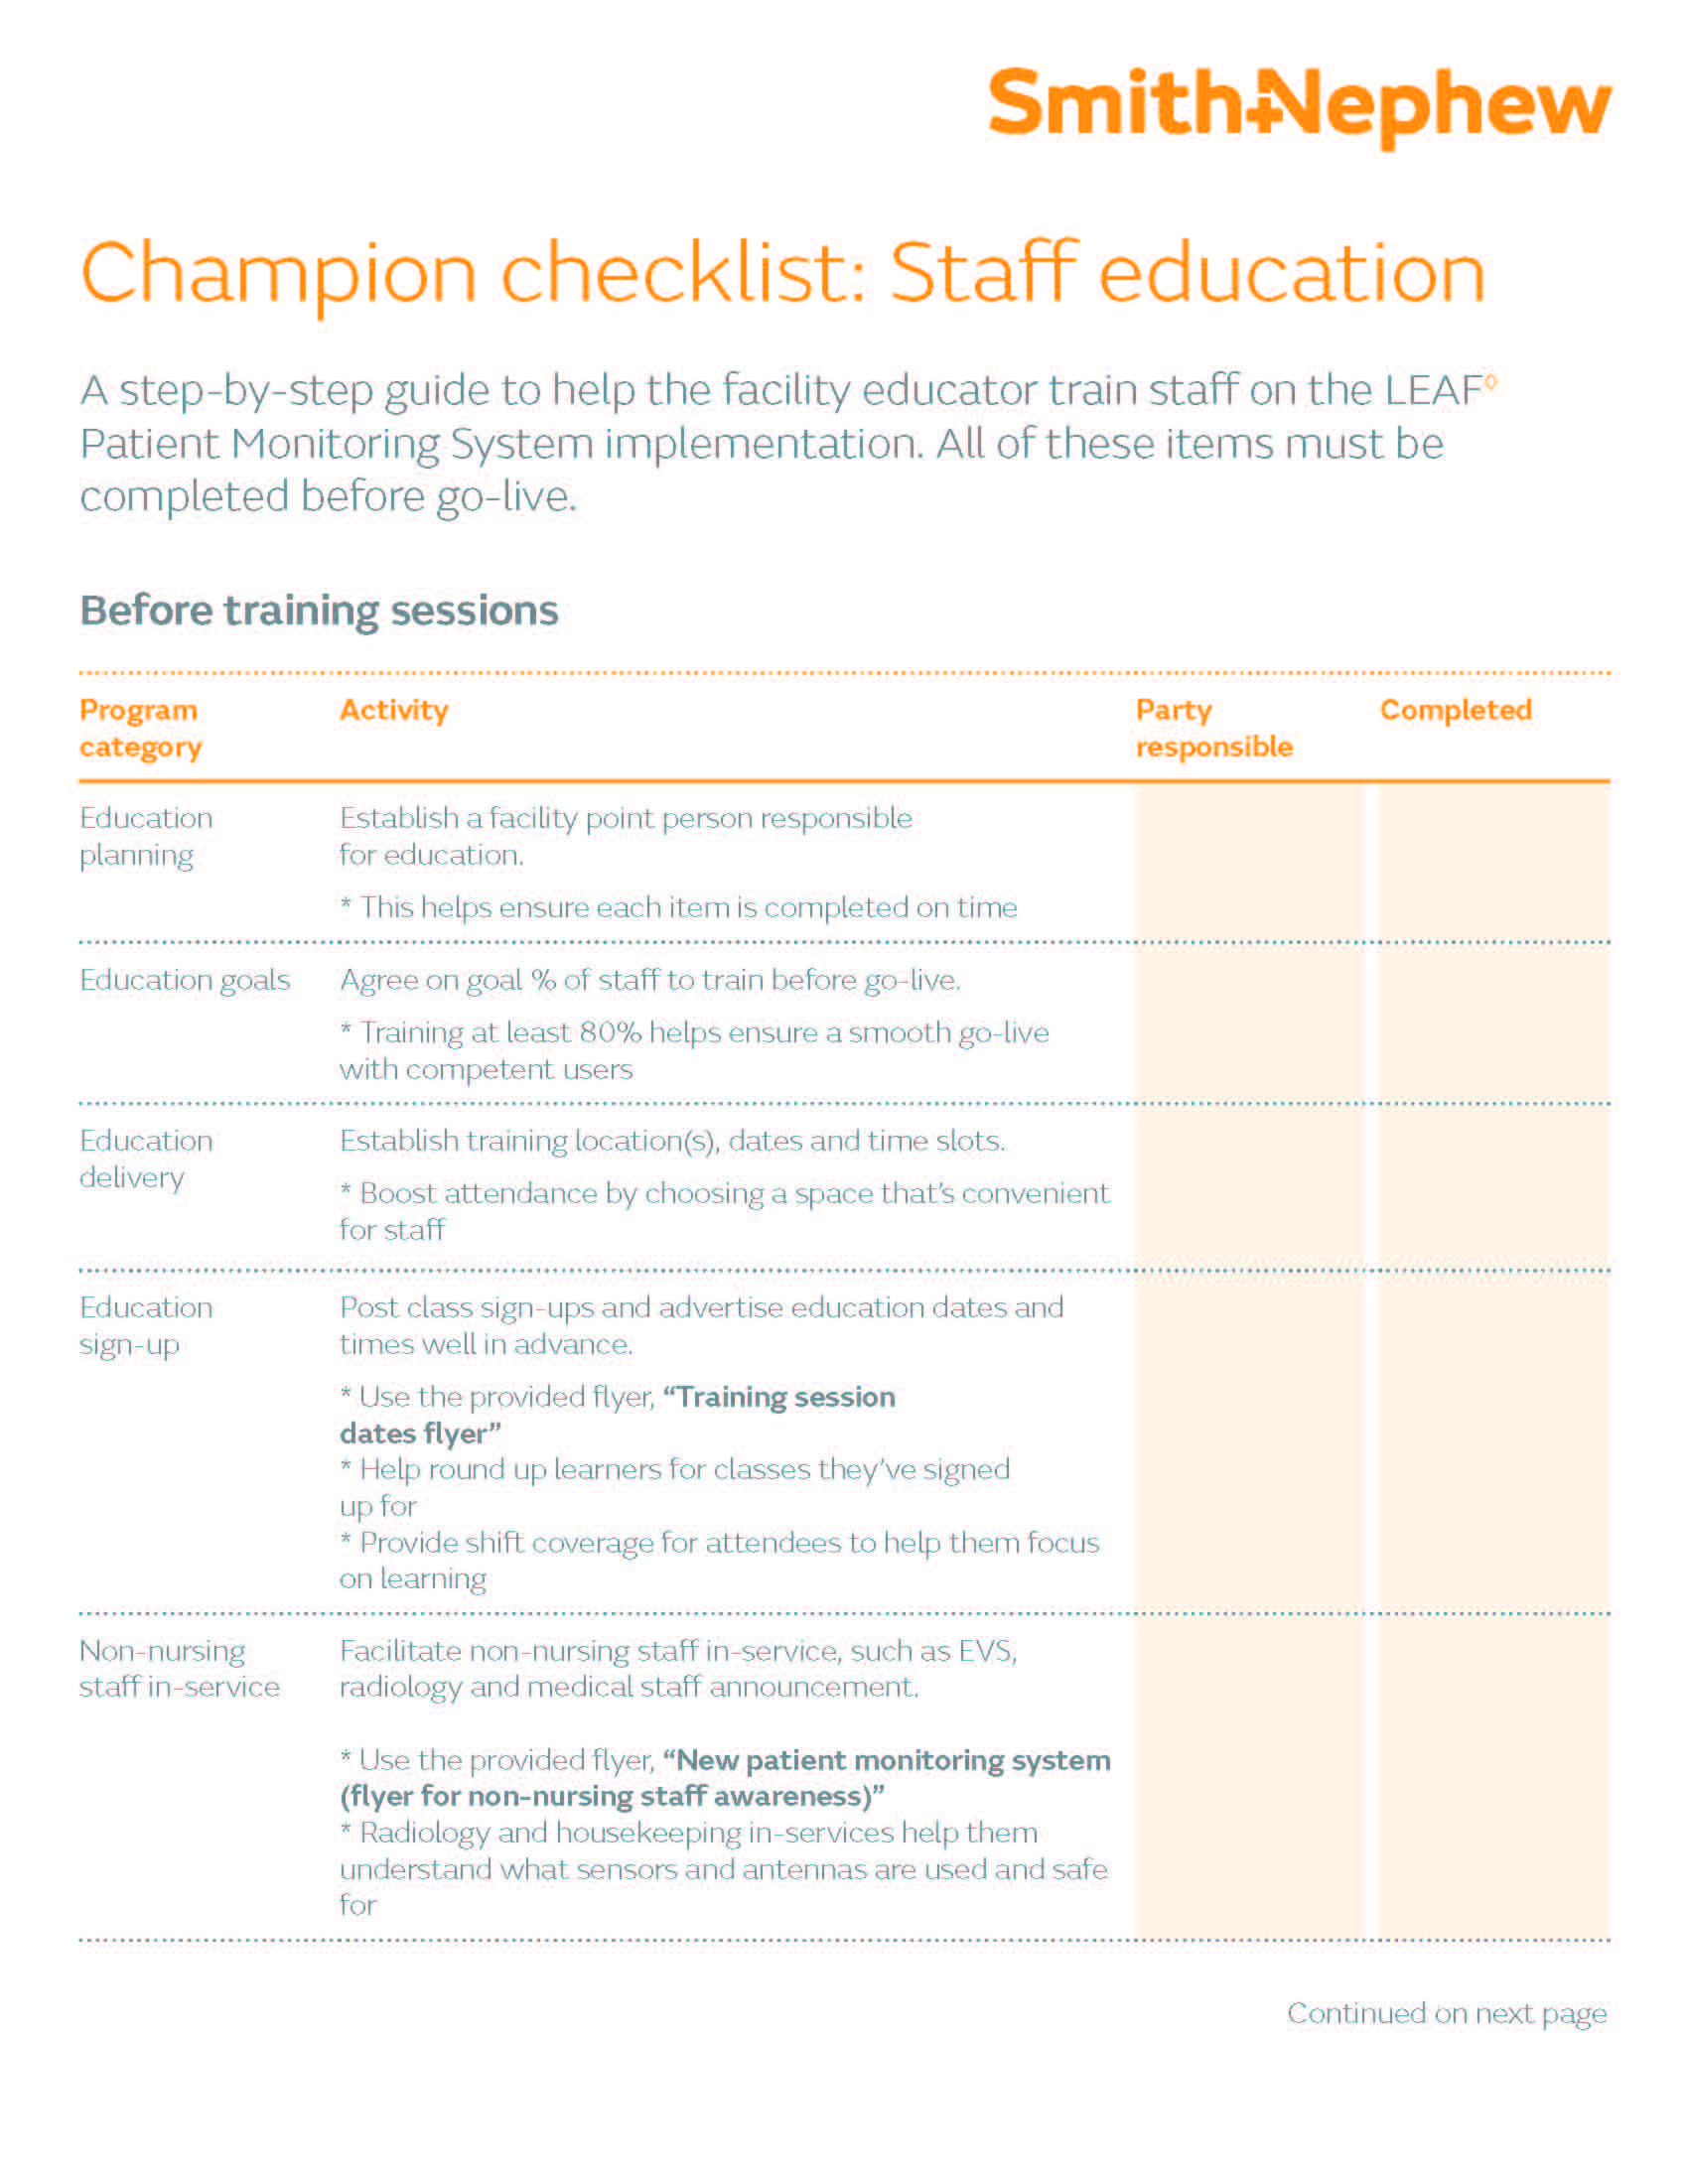 Champion Checklist